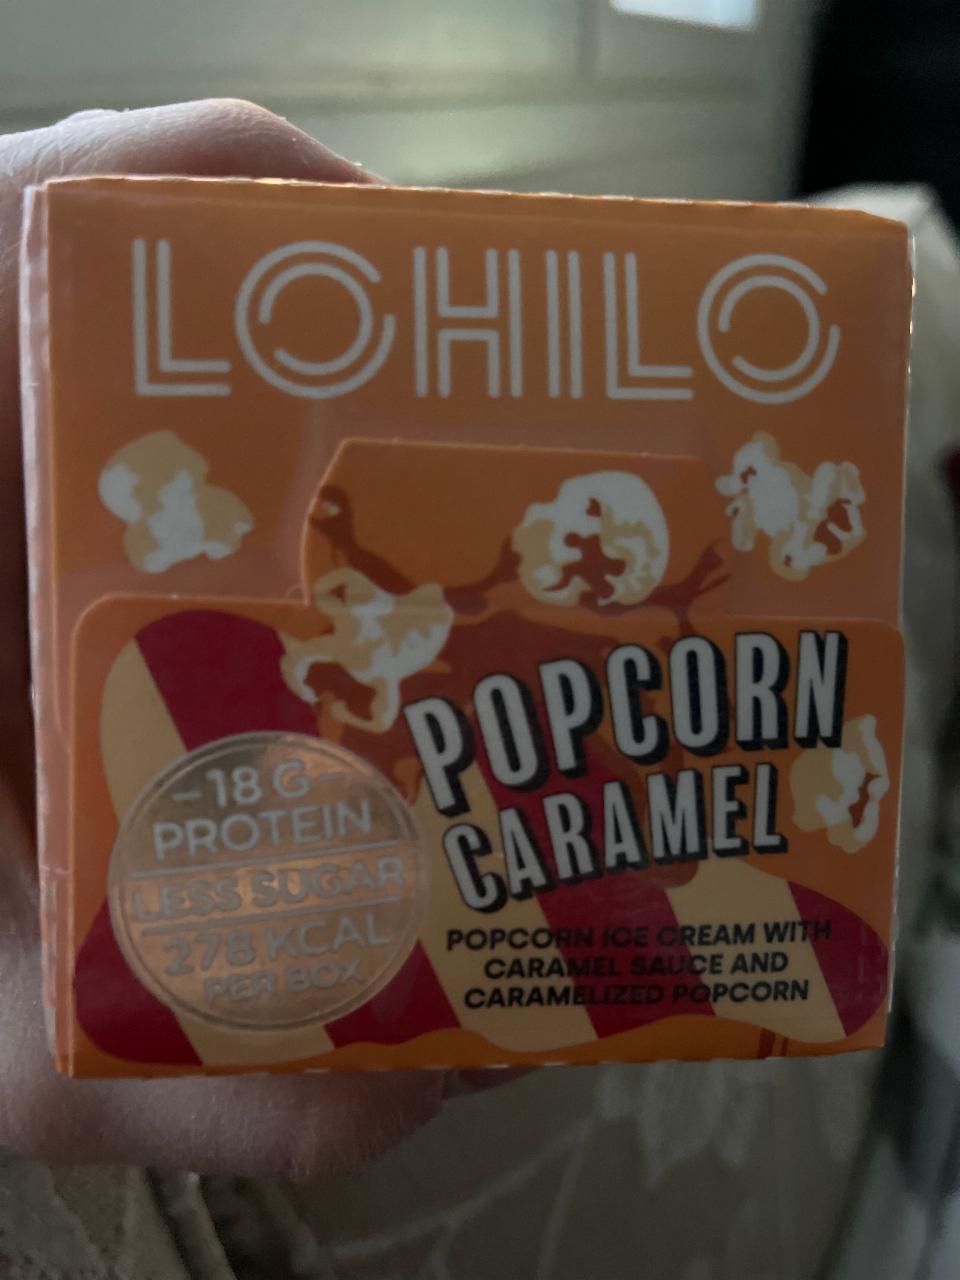 Фото - Мороженое Popcorn caramel Lohilo